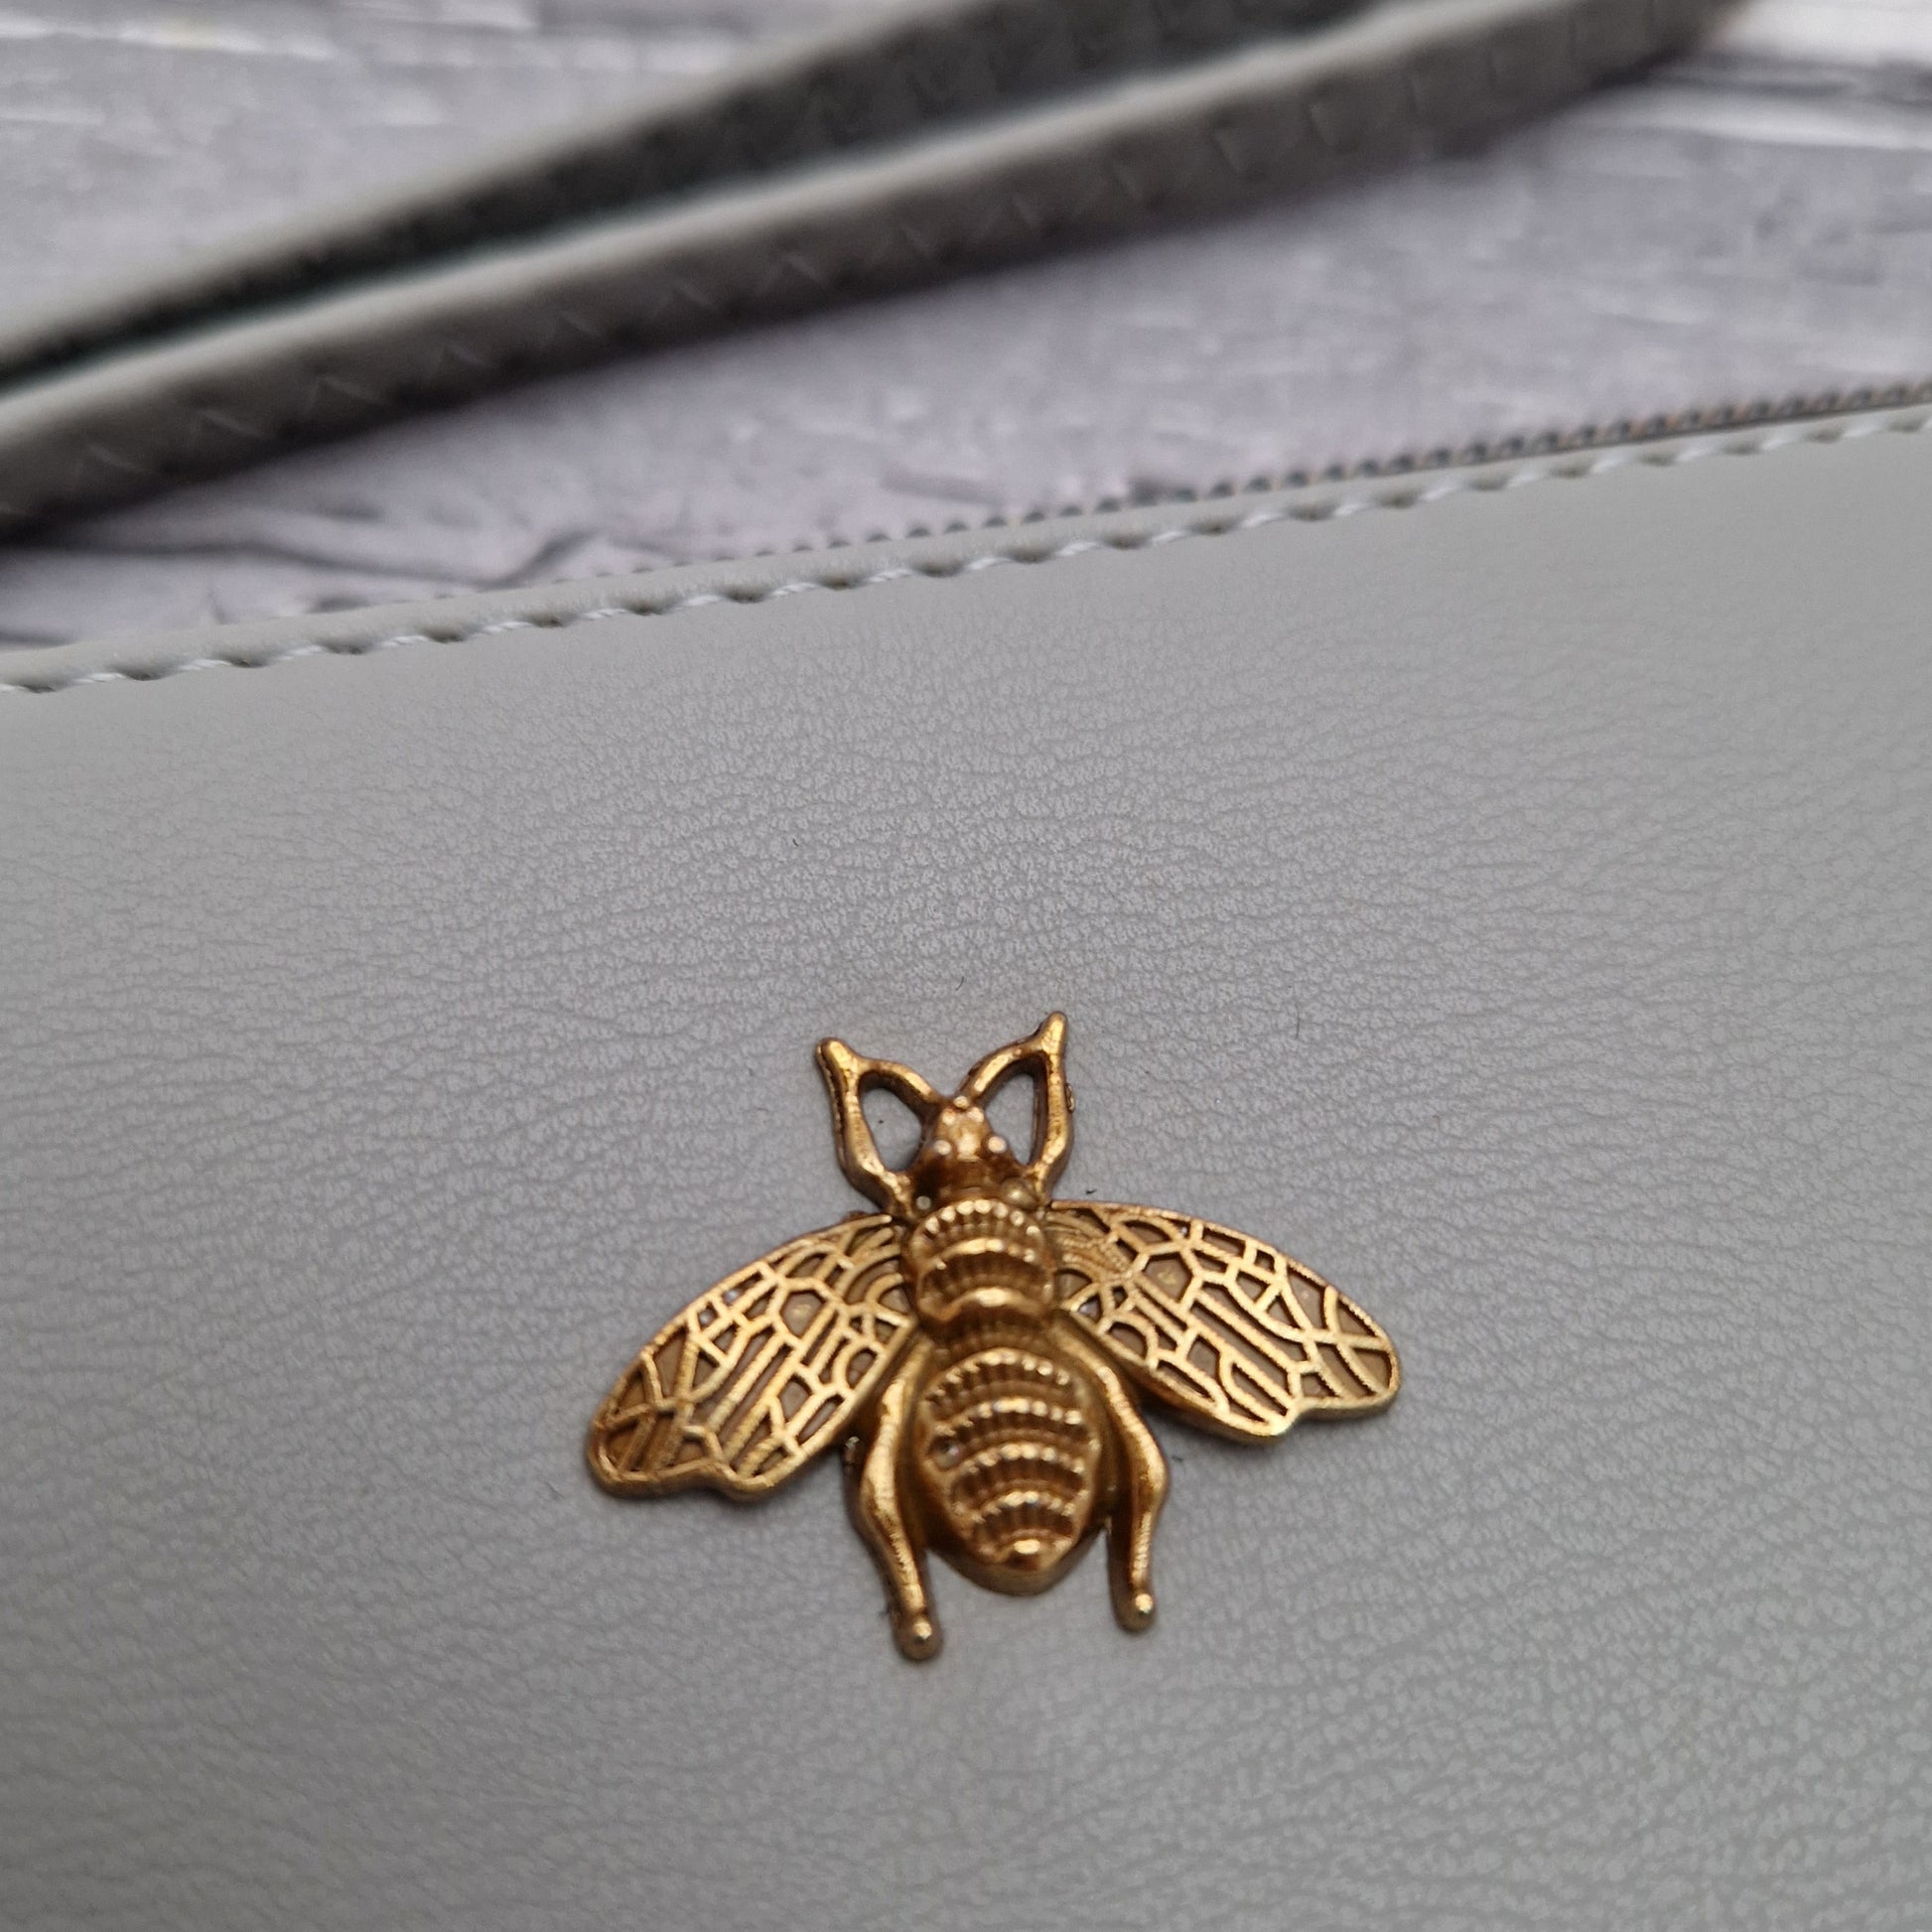 Silver Grey Clutch bag with a Bee emblem